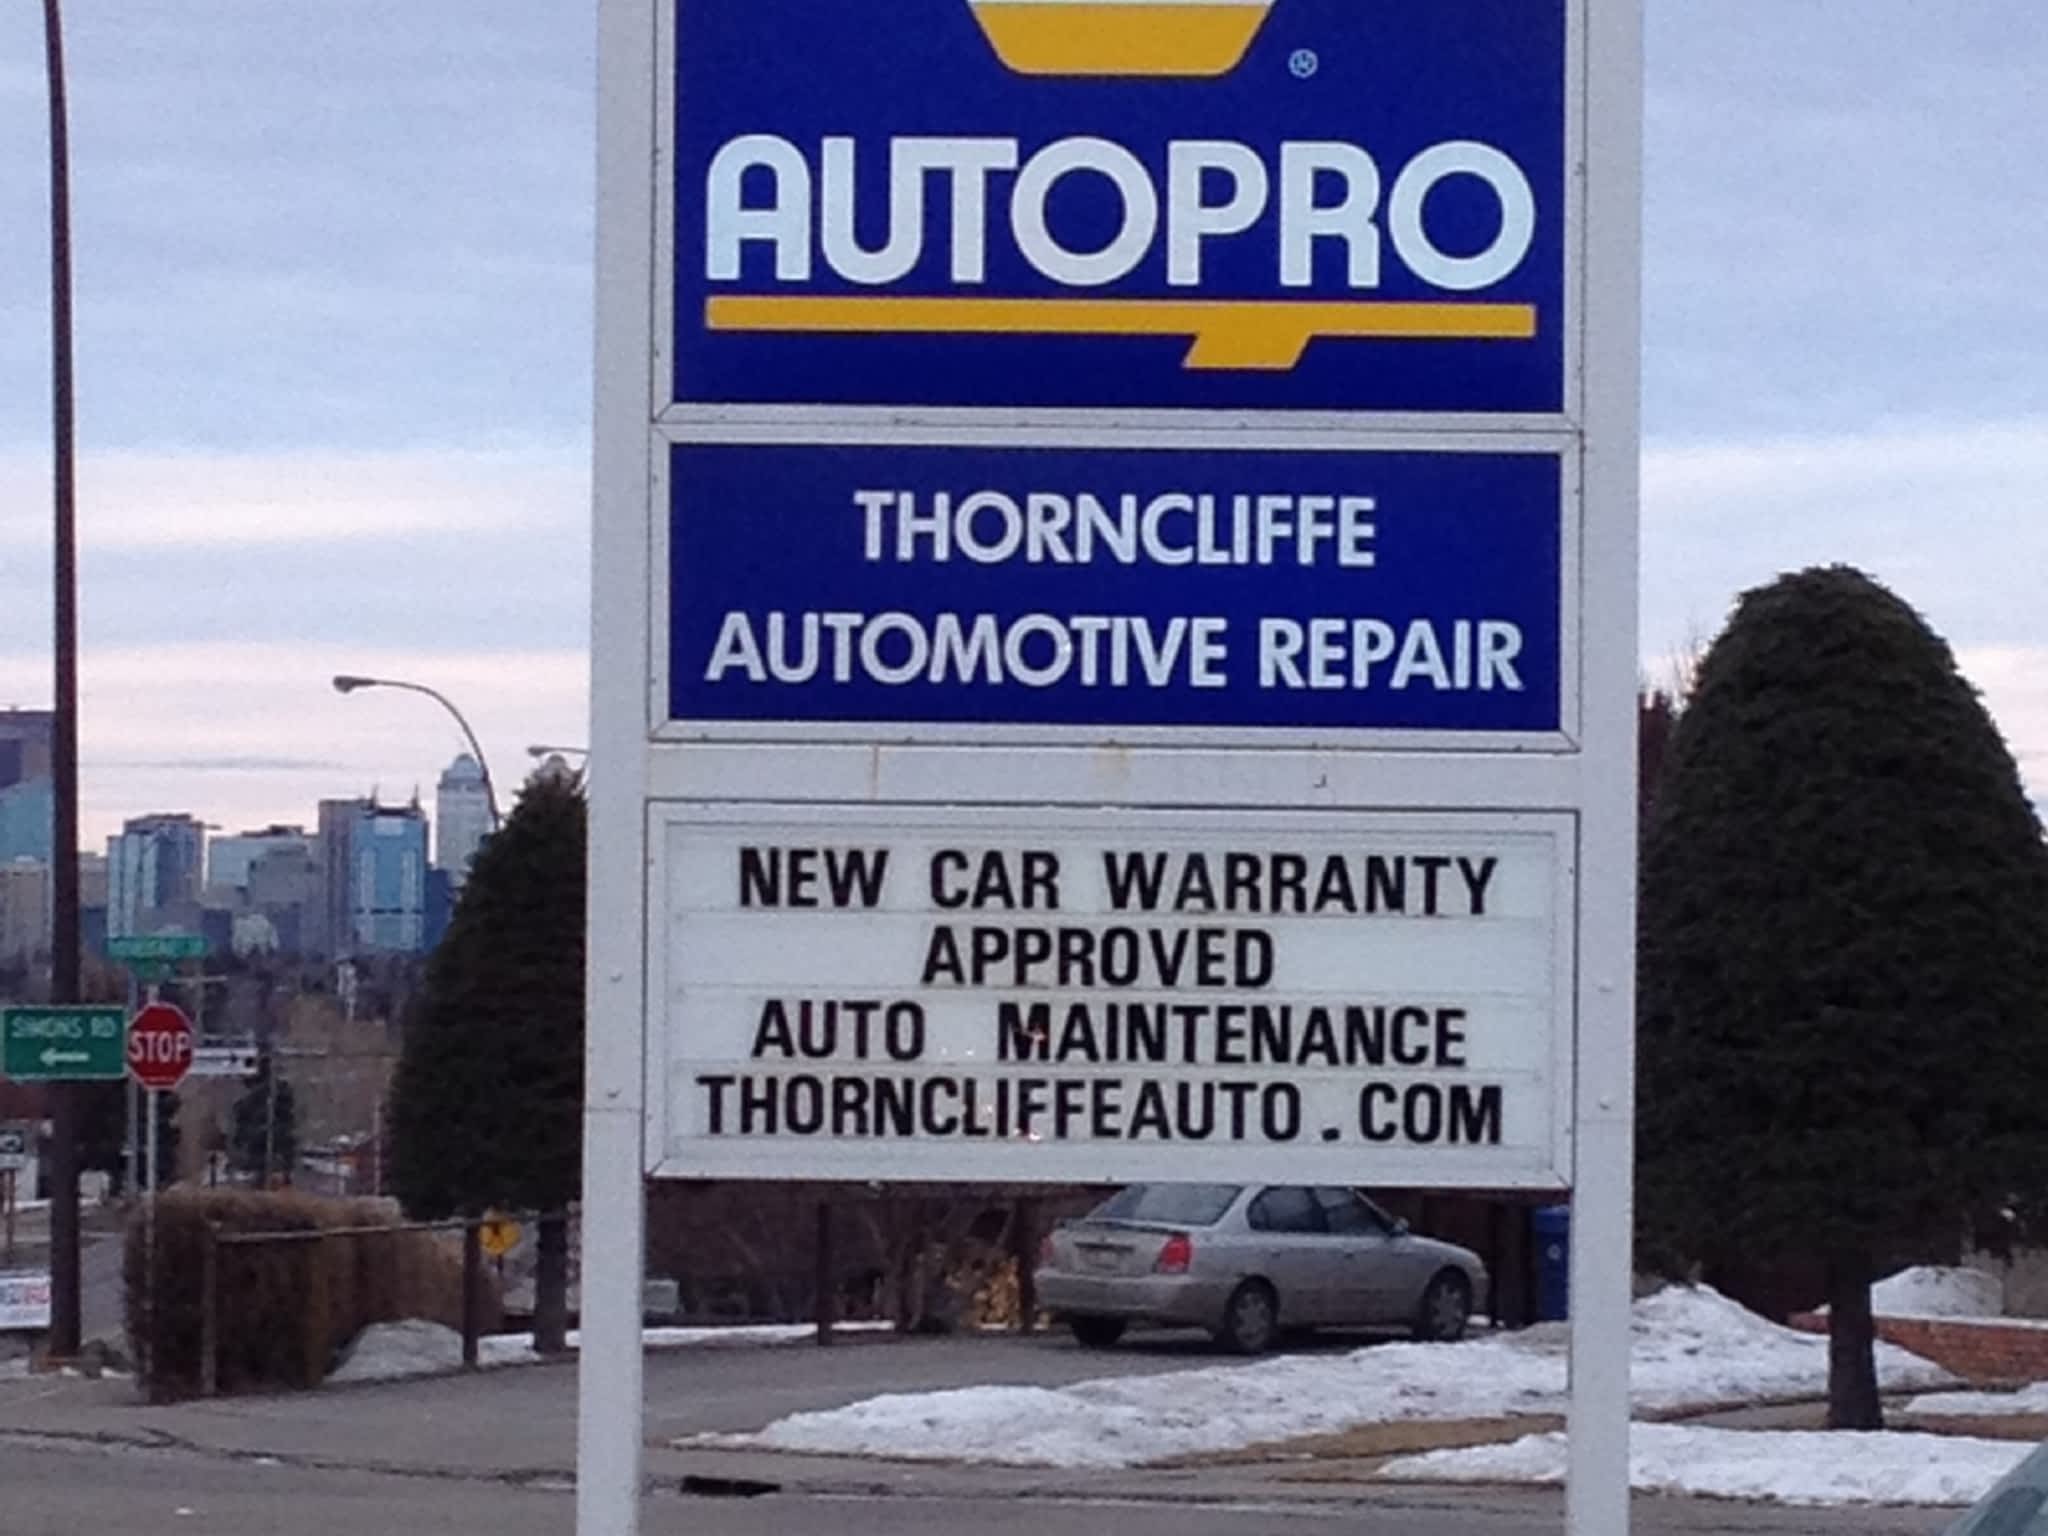 photo NAPA AUTOPRO - Thorncliffe Automotive Repair